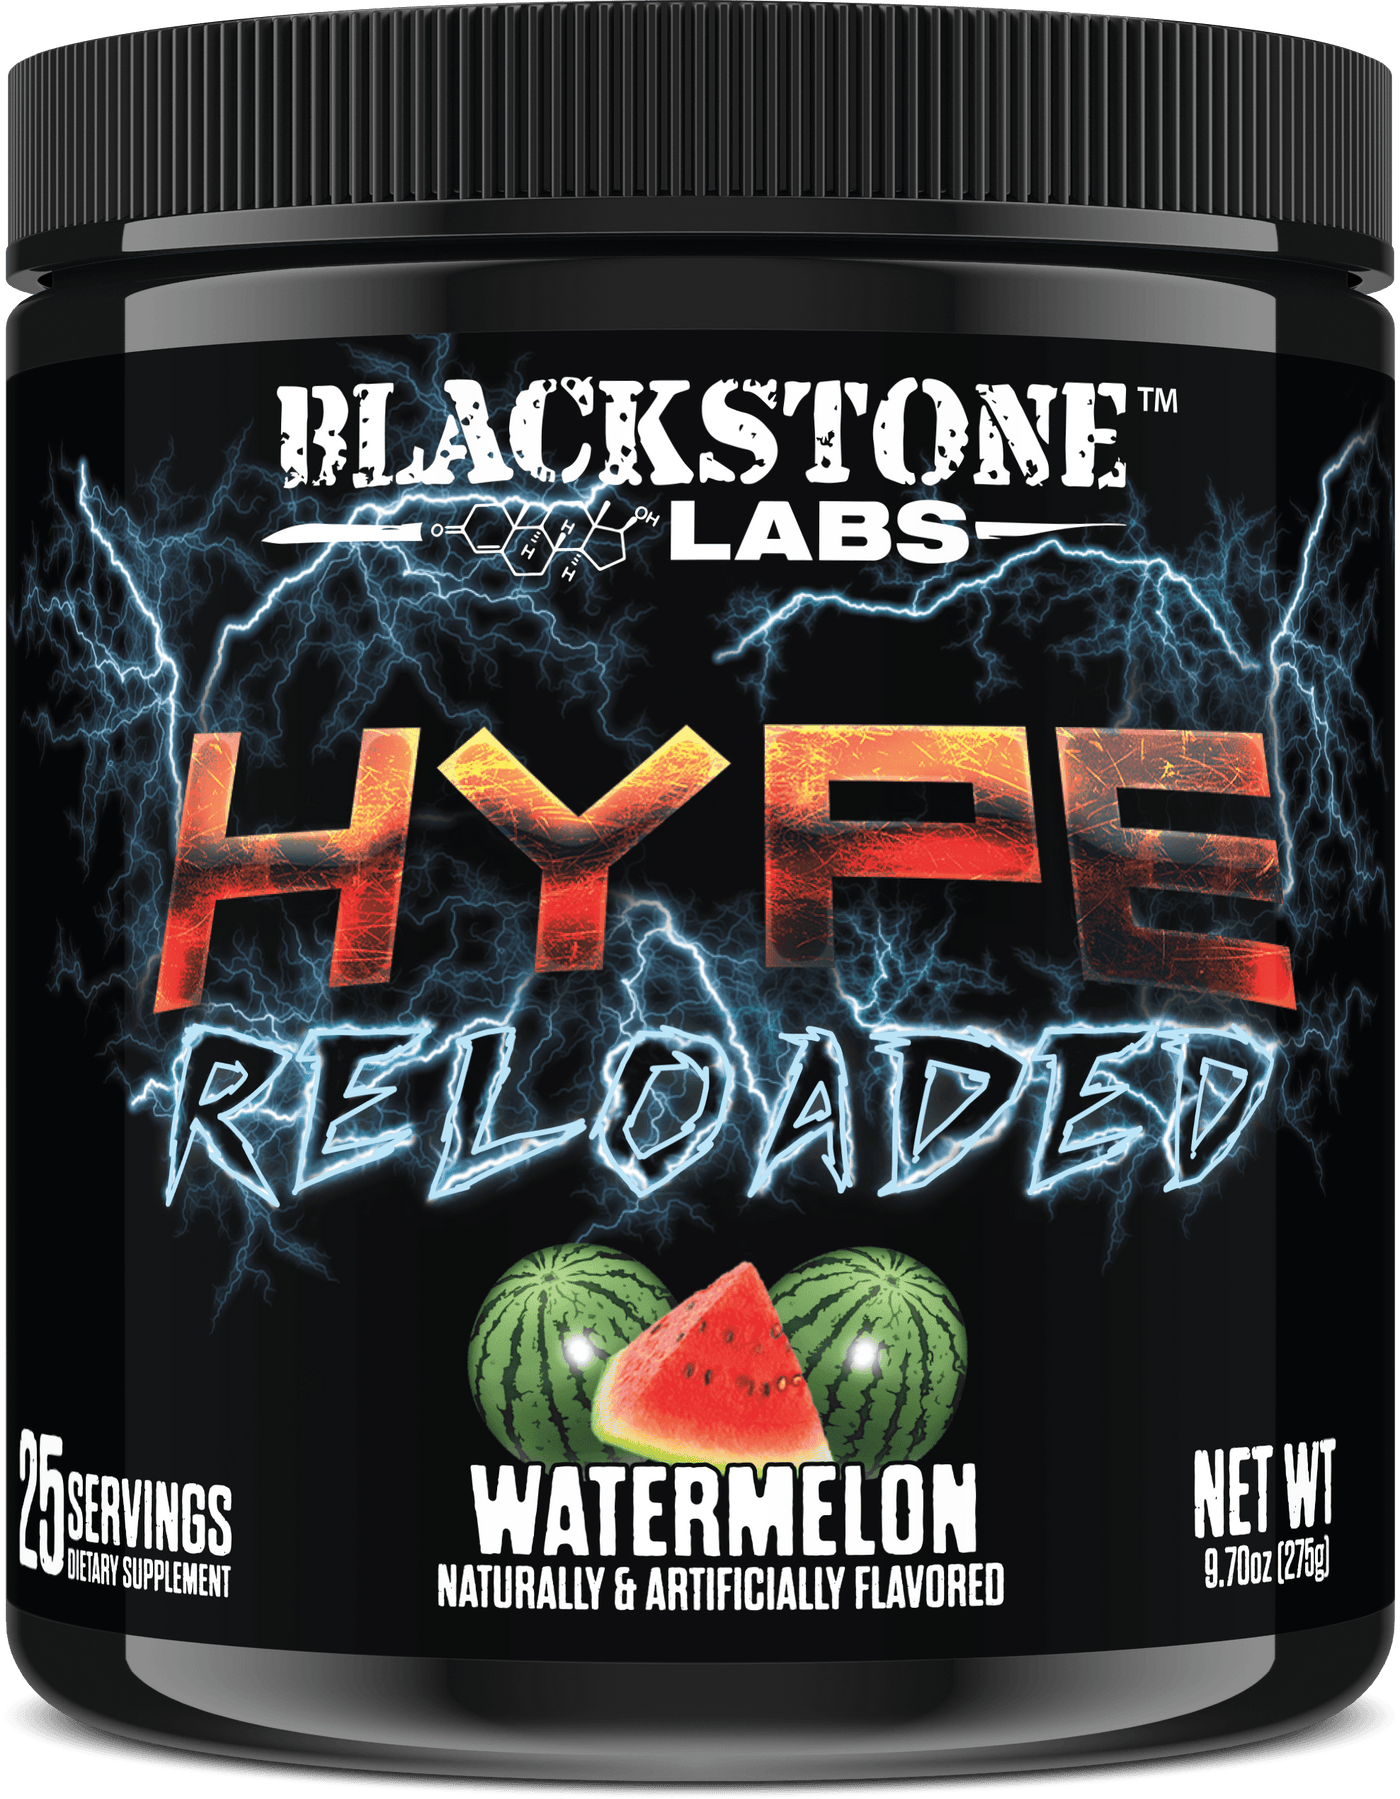 Blackstone Labs Watermelon Blackstone Labs Hype Reloaded, 25 Servings